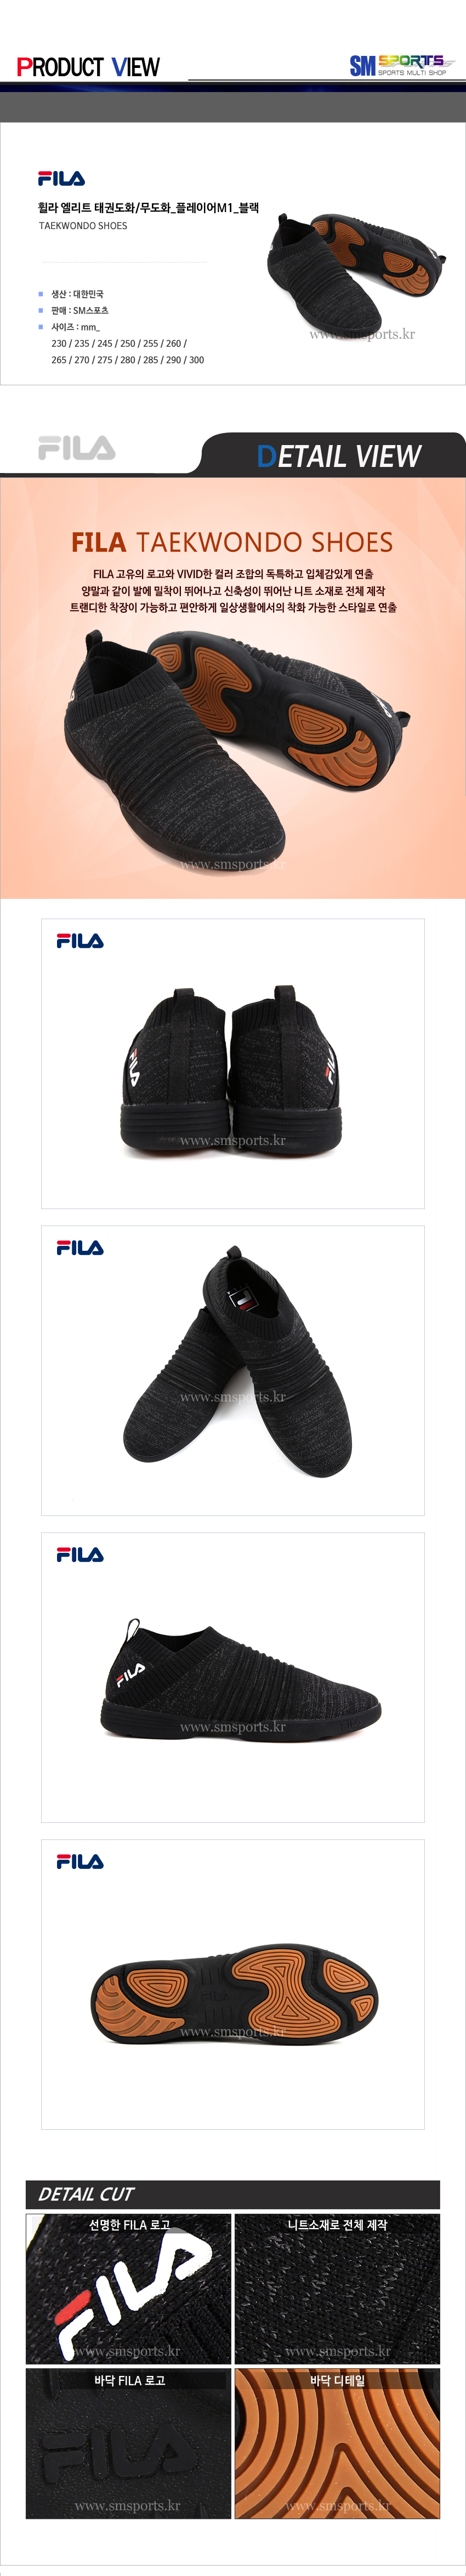 fila taekwondo shoes